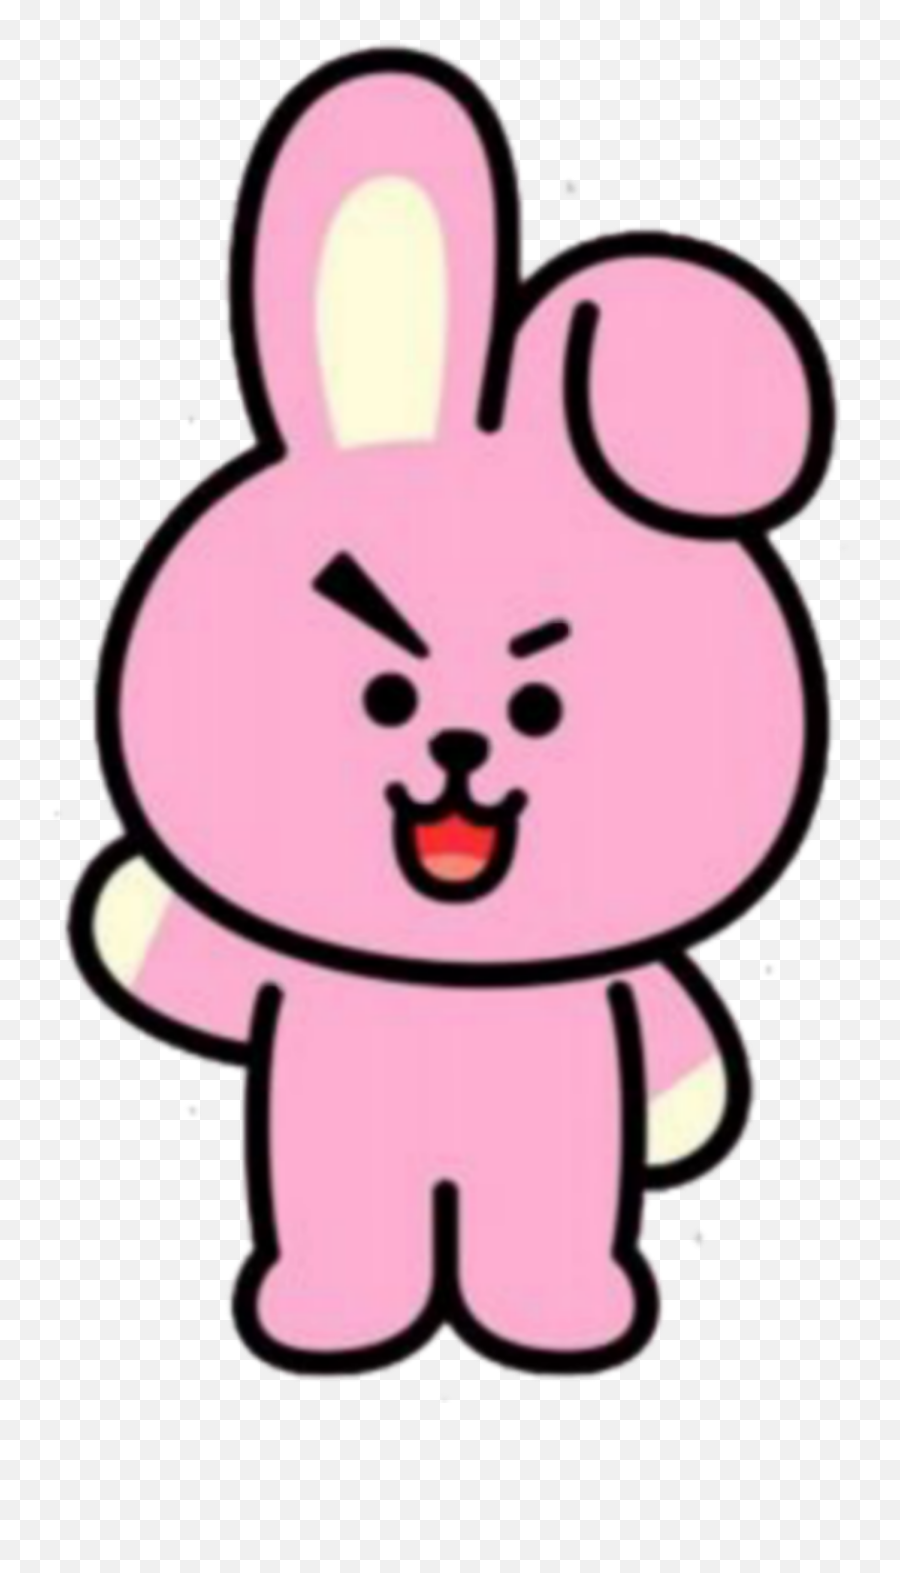 Cooky Pinkishtoughbunnycooky Jungkook Bt21 Bts - Bt21 Cooky Emoji,Bt21 Emoji